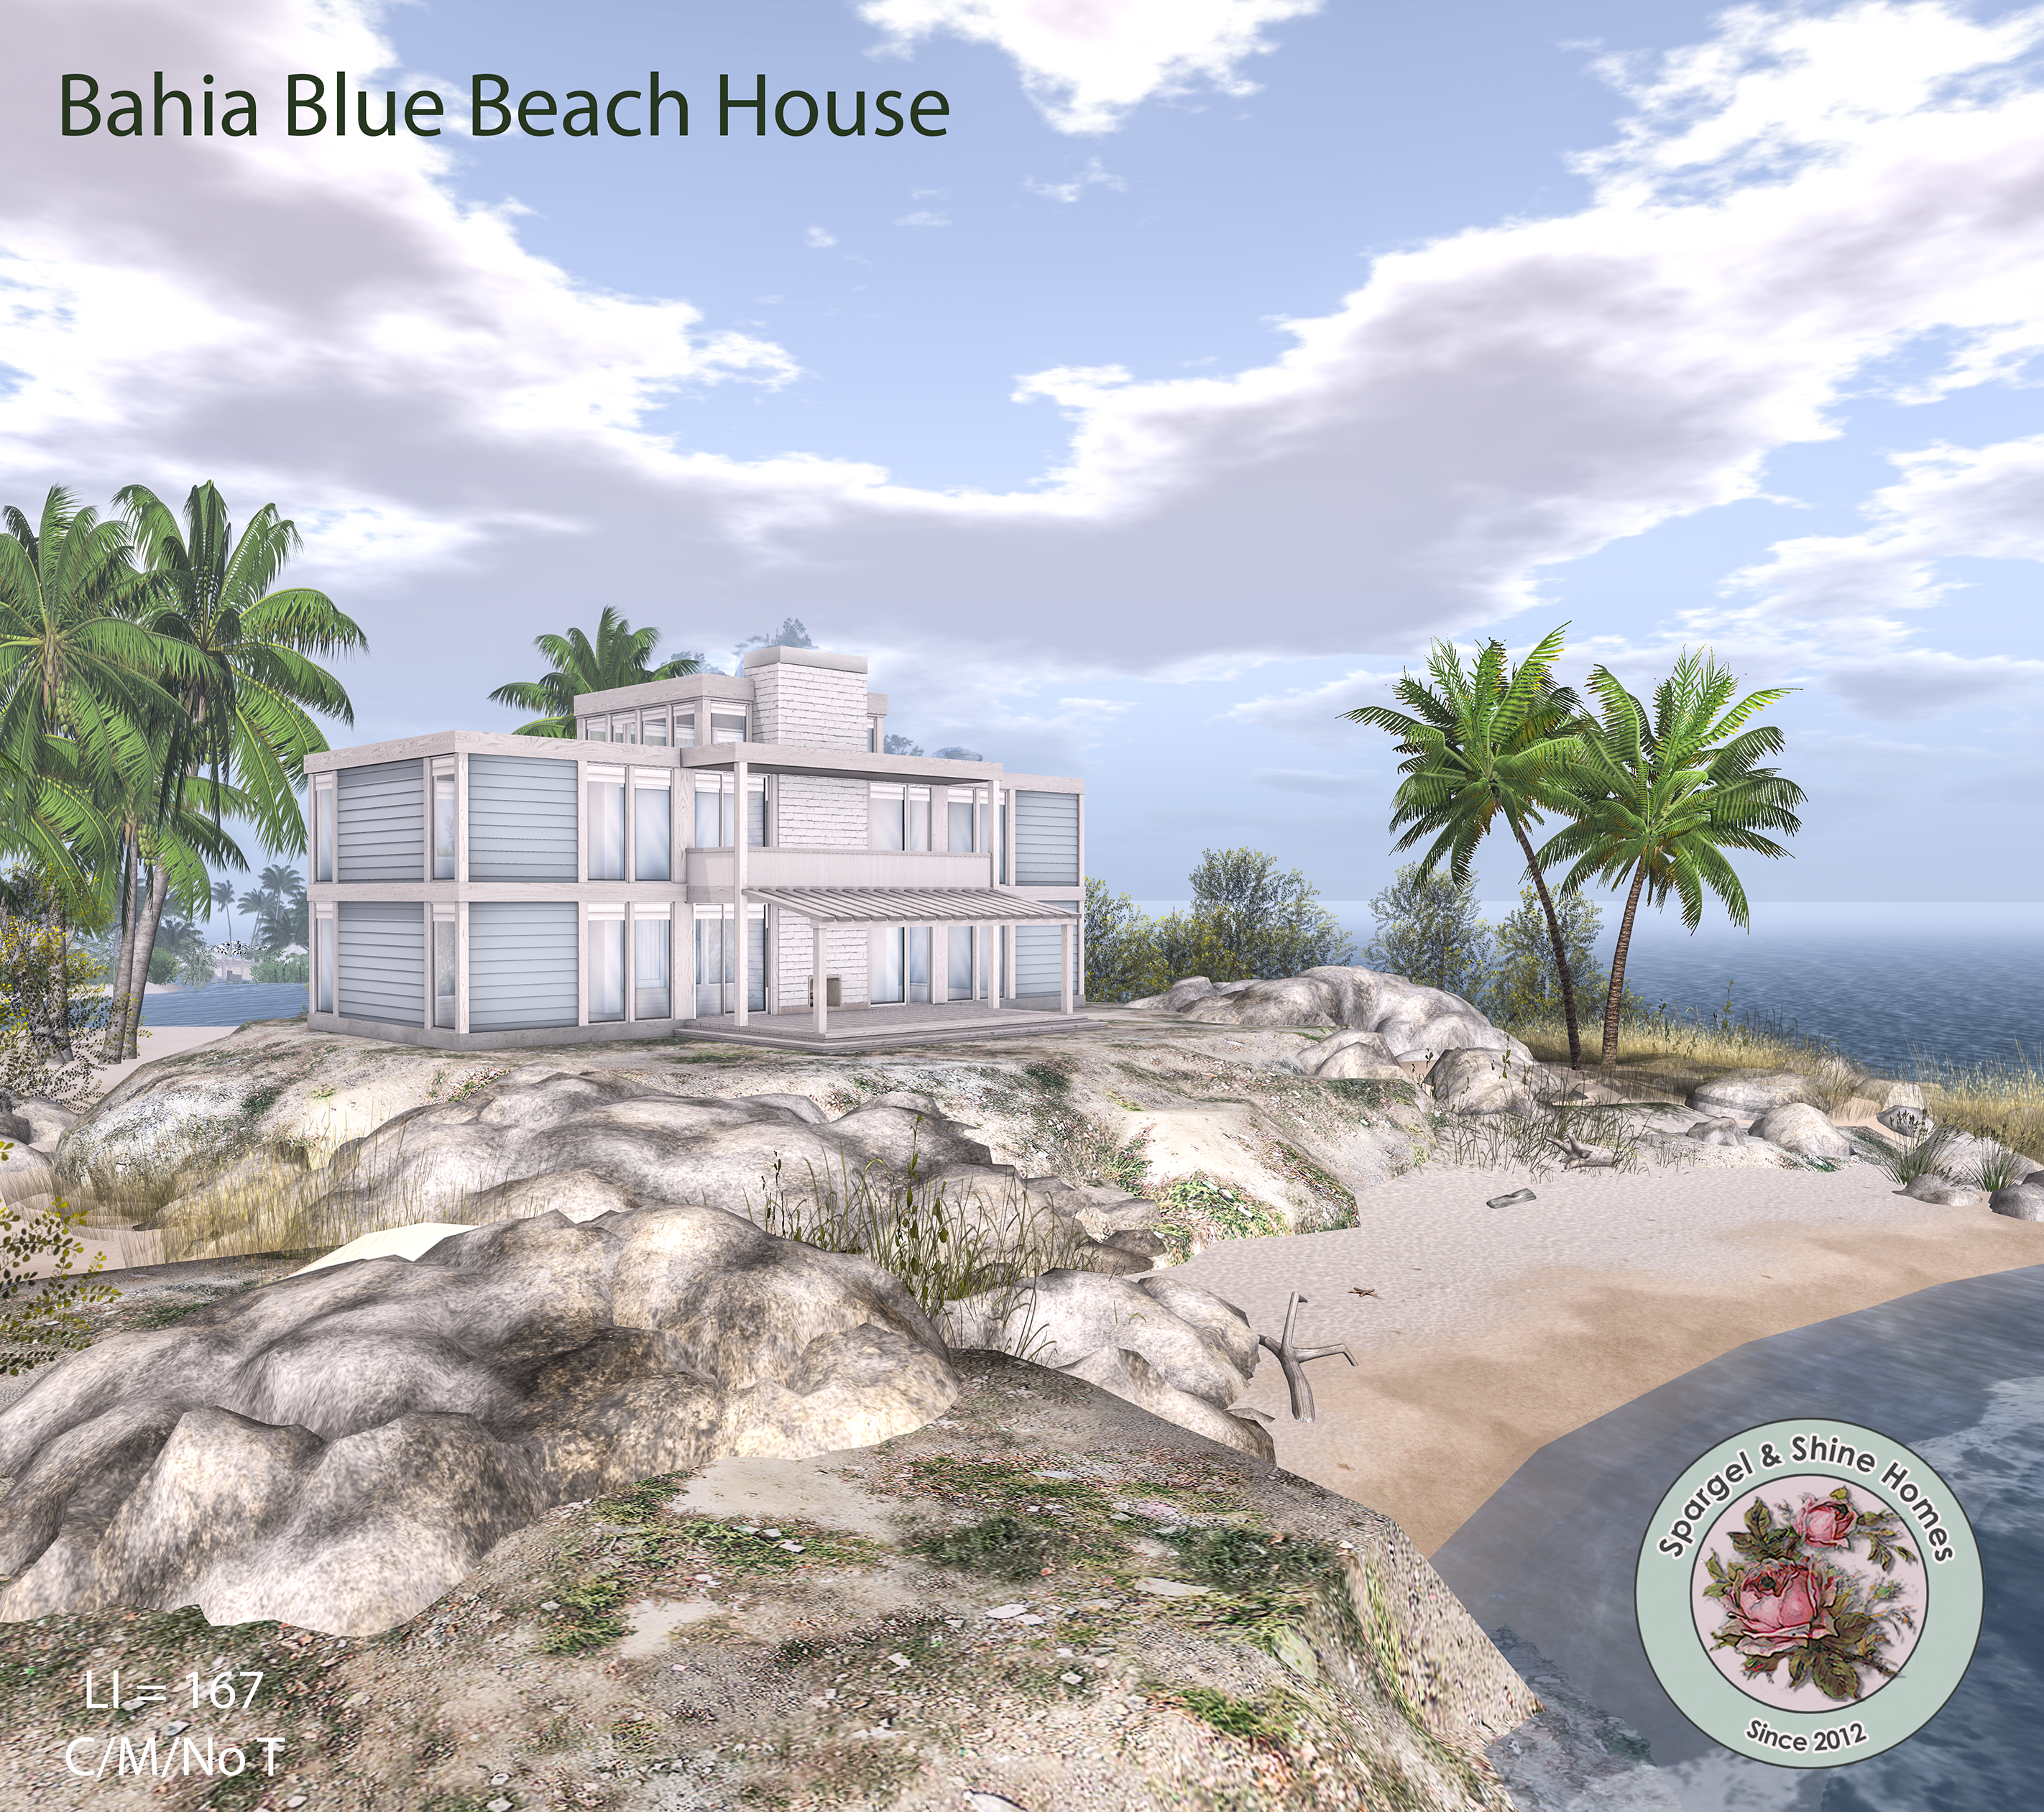 Spargel & Shine – Bahia Blue Beach House and Digger’s Cove Dock House 50%